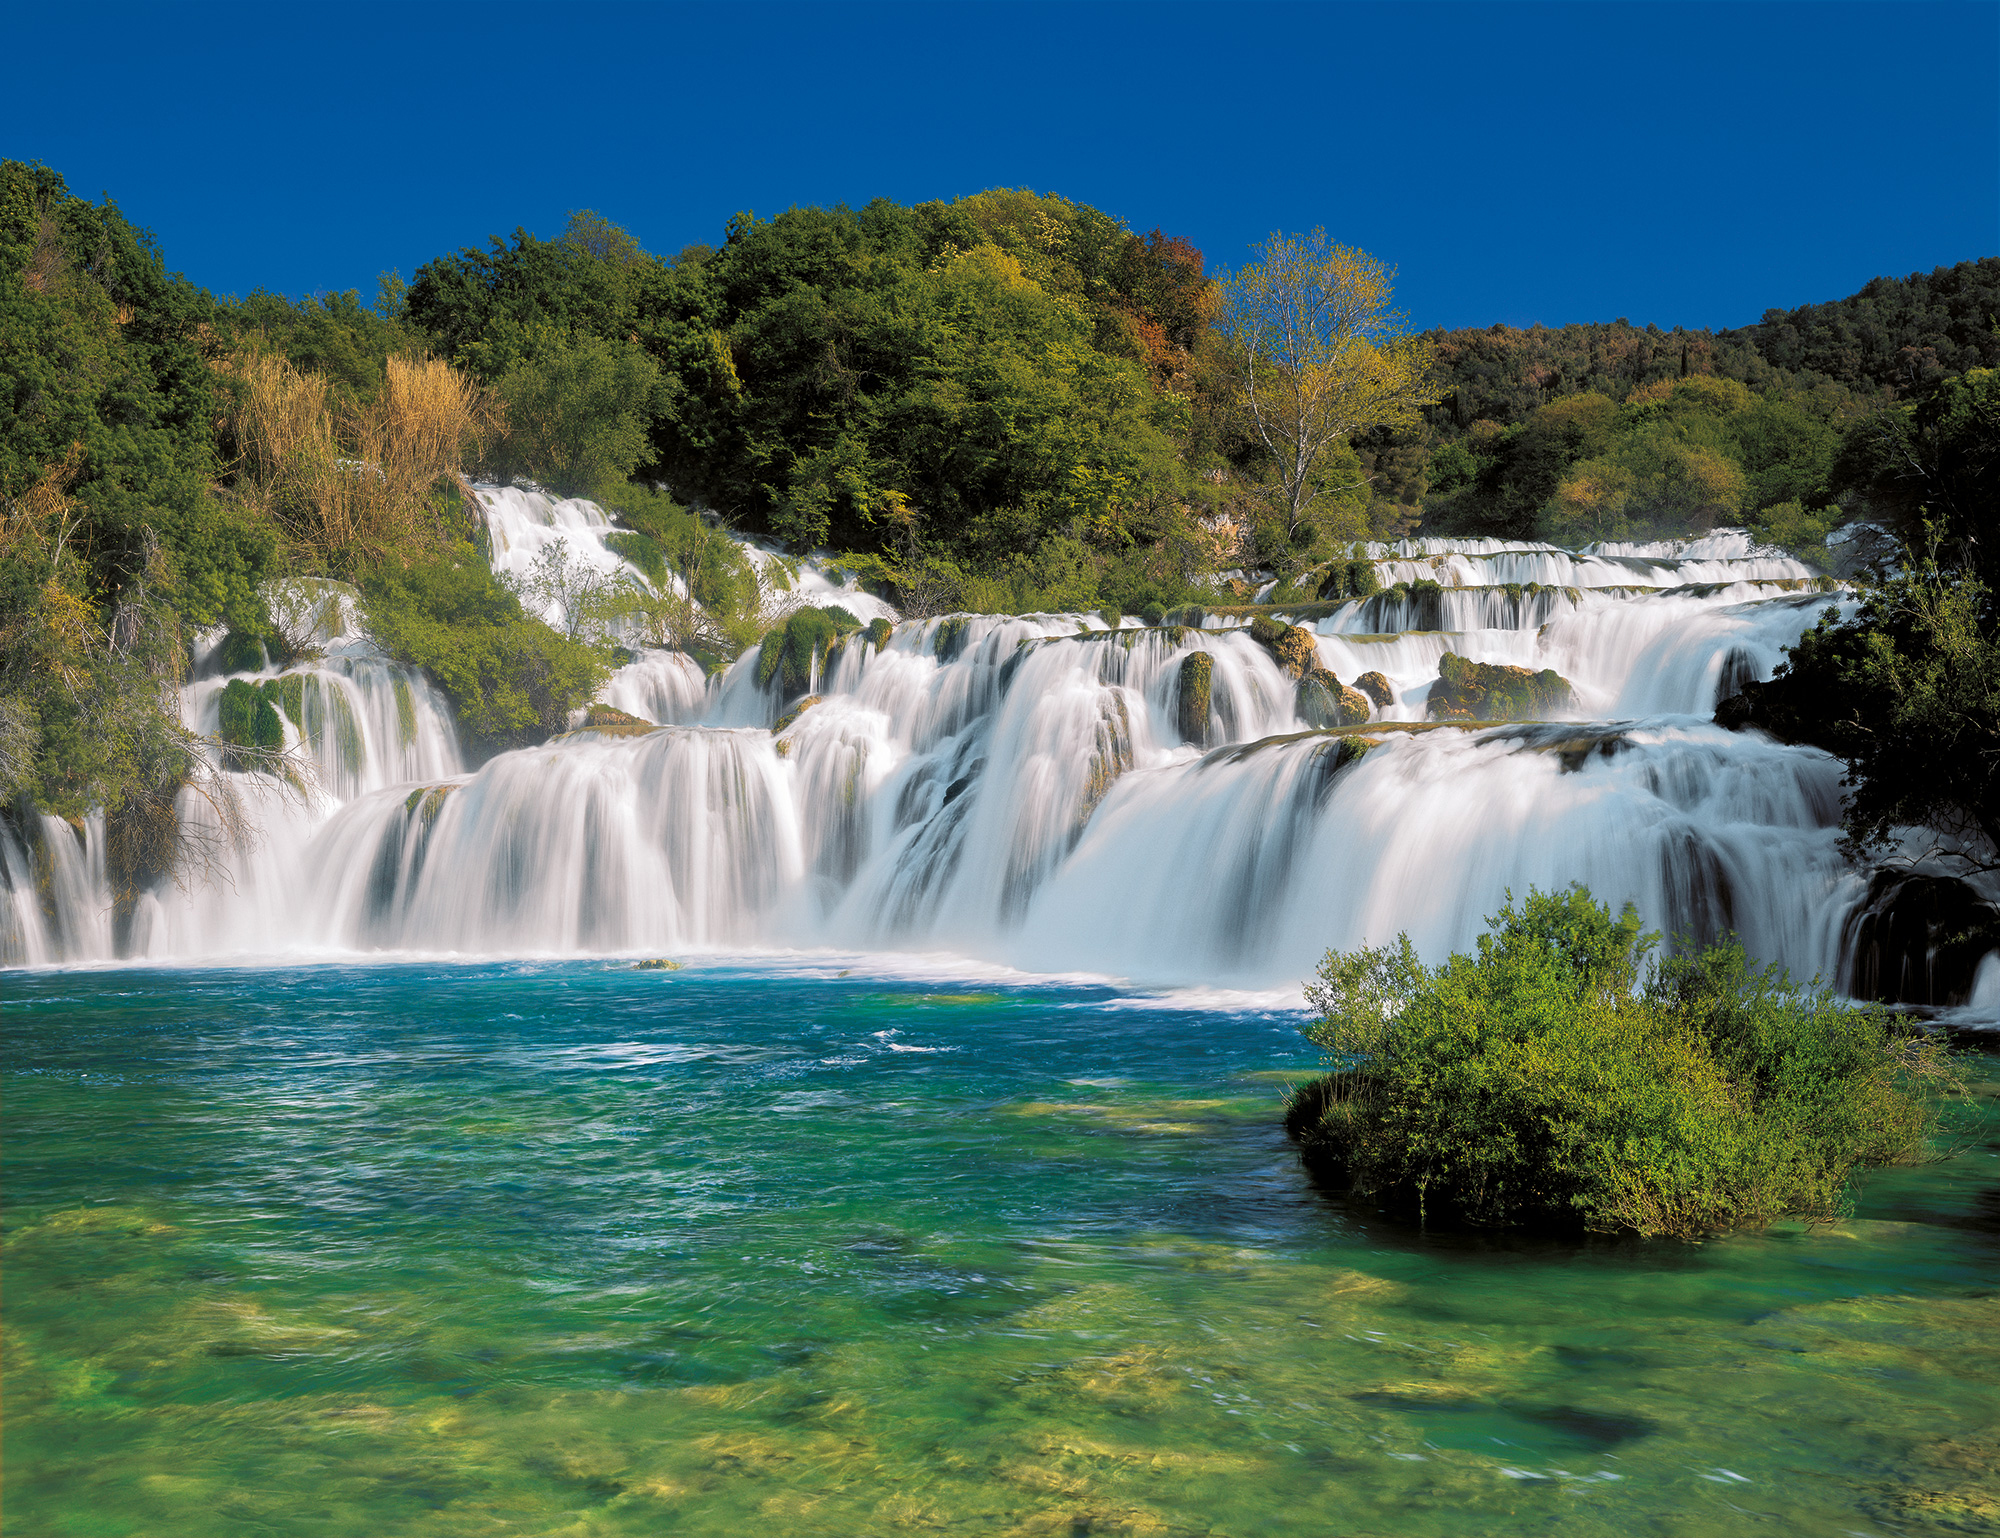 Комар водопад. Фотообои Komar водопад. Фотообои водопад в Хорватии. Шутерсток фотообои. Shutterstock фотообои.